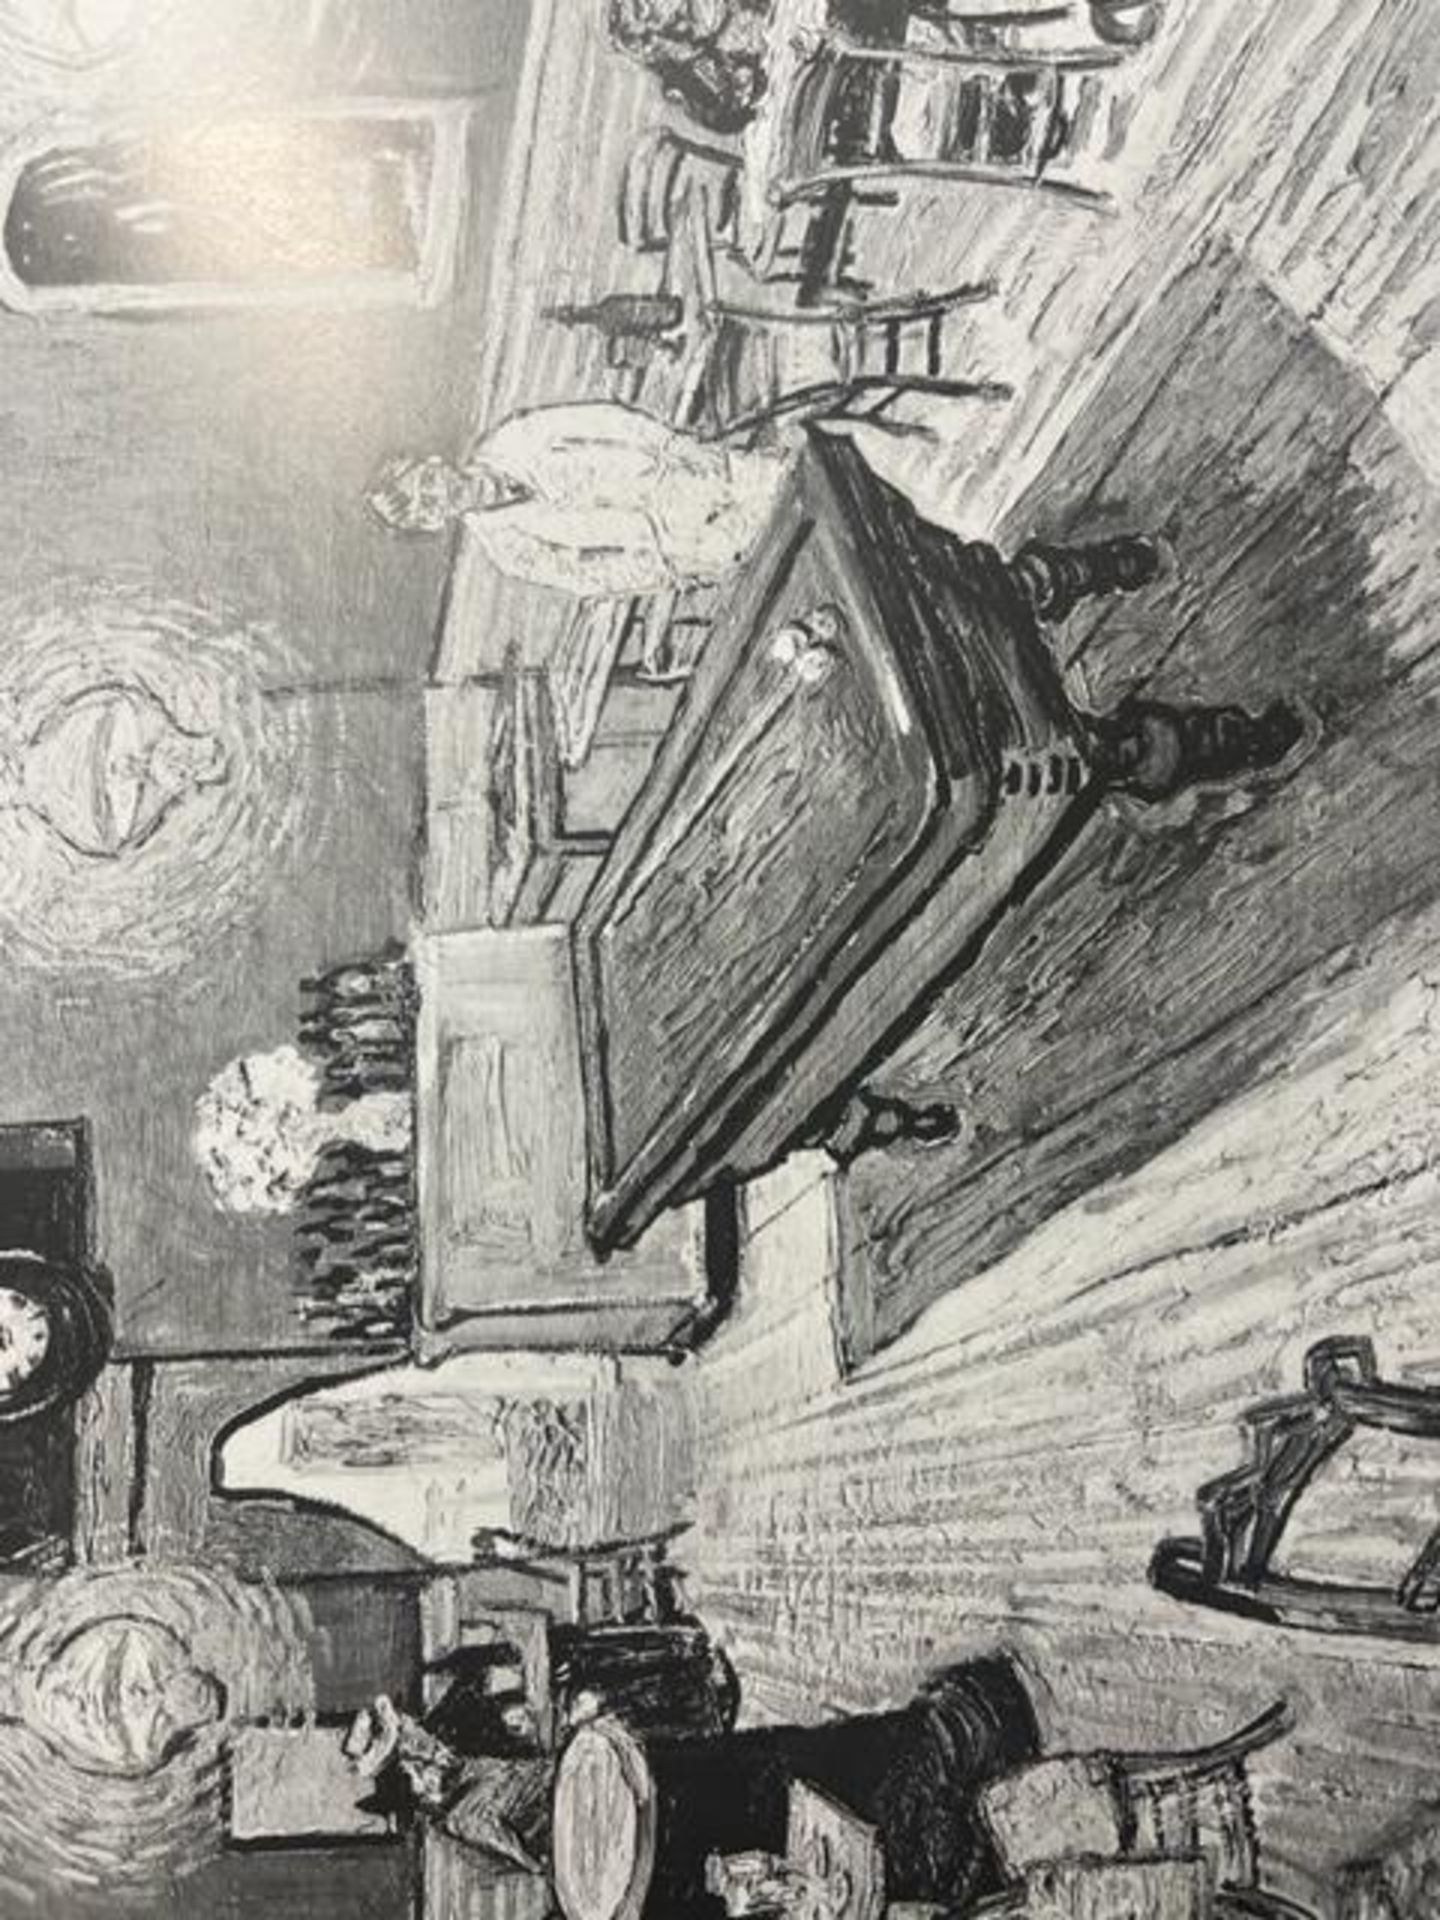 Vincent van Gogh "The Night Cafe" Print. - Bild 4 aus 6